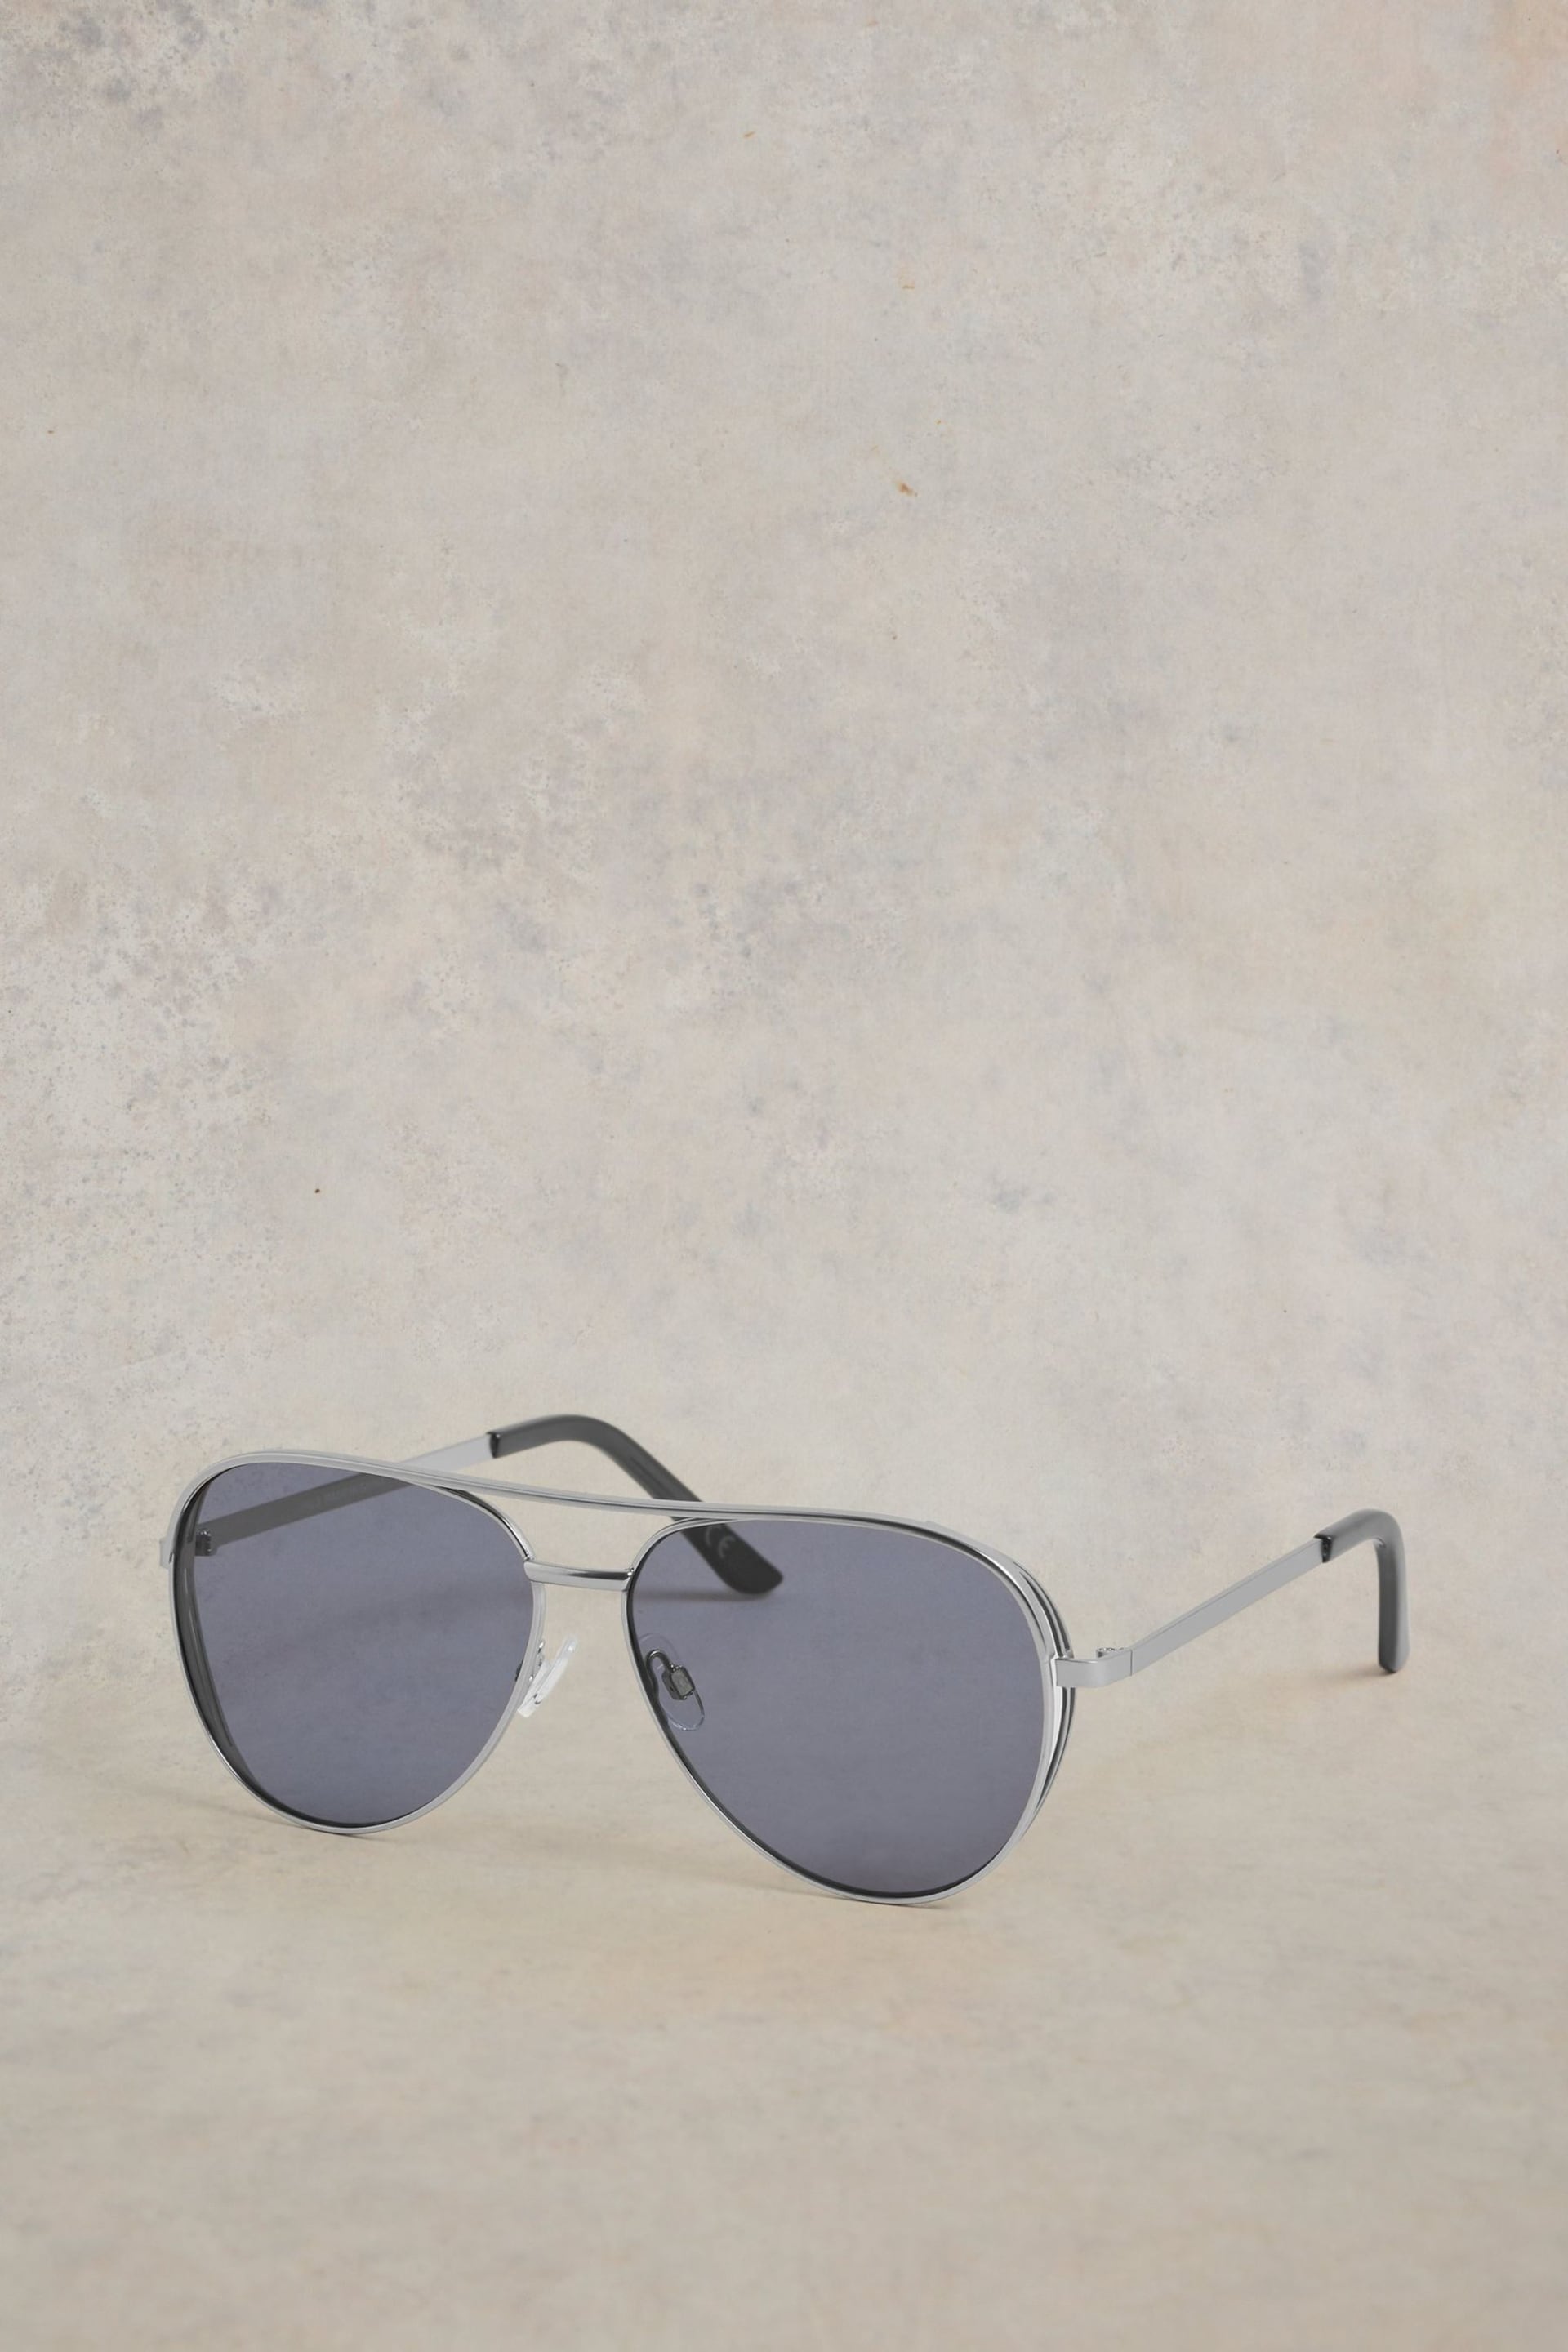 White Stuff Silver Tone Hana Aviator Sunglasses - Image 2 of 4